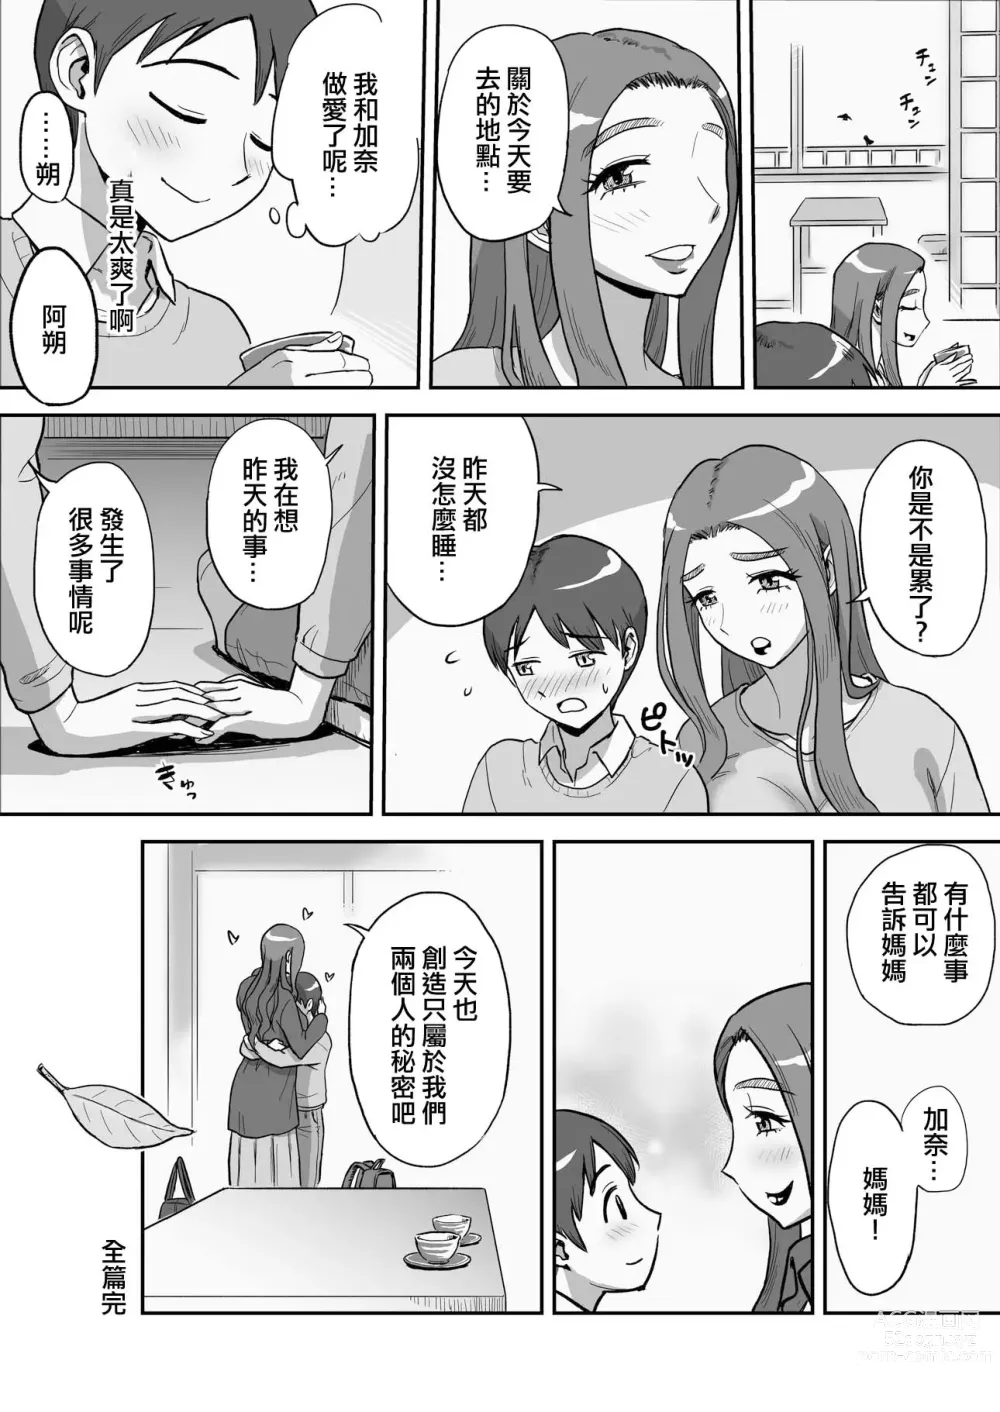 Page 56 of doujinshi 僅此一天的媽媽 這是隻屬於我們...兩人的秘密...哦?....